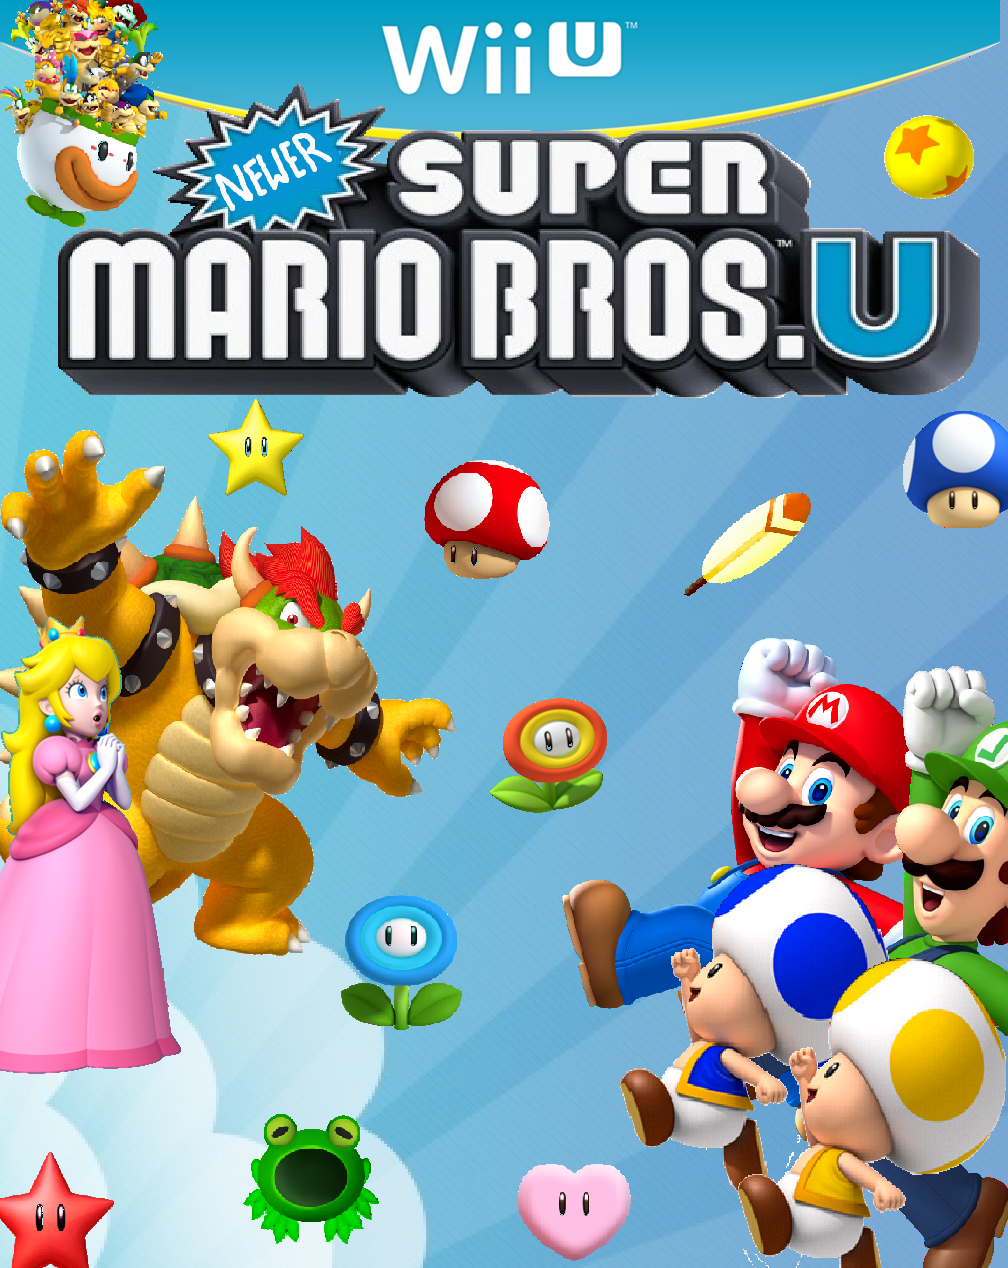 Newer Super Mario Bros U Fantendo Nintendo Fanon Wiki Fandom Powered By Wikia 7063